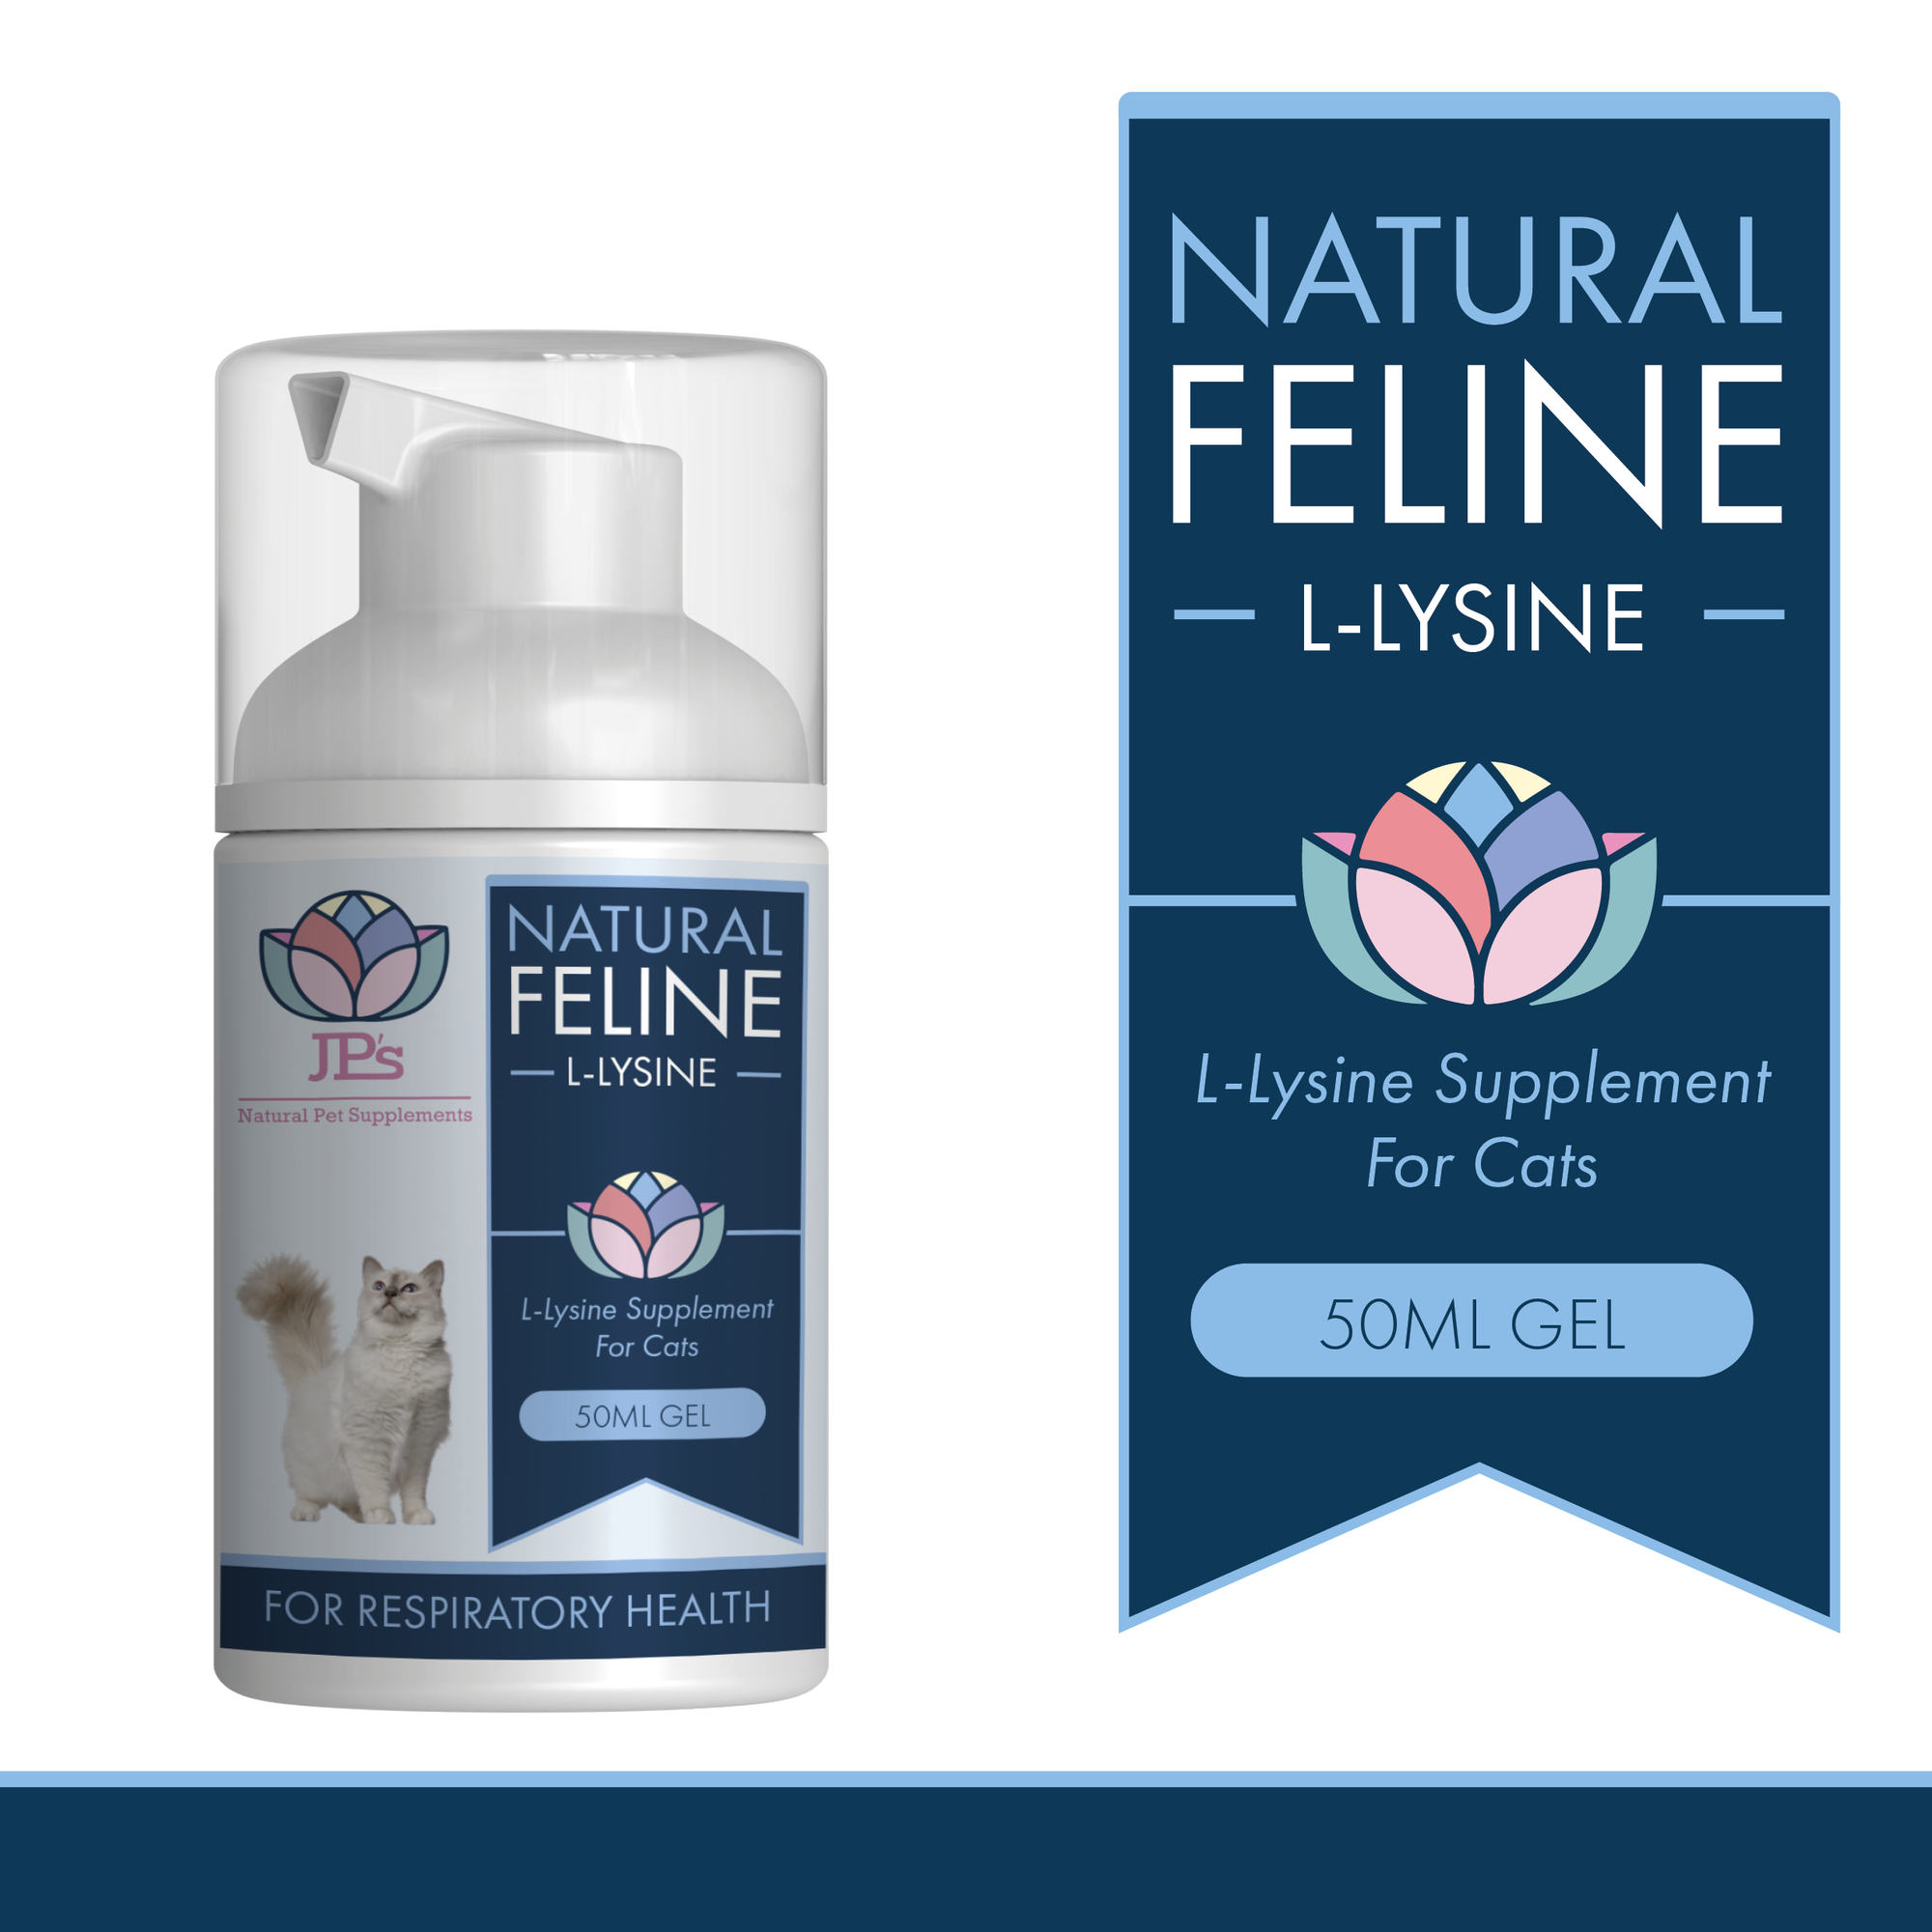 Natural Feline L-Lysine Supplement